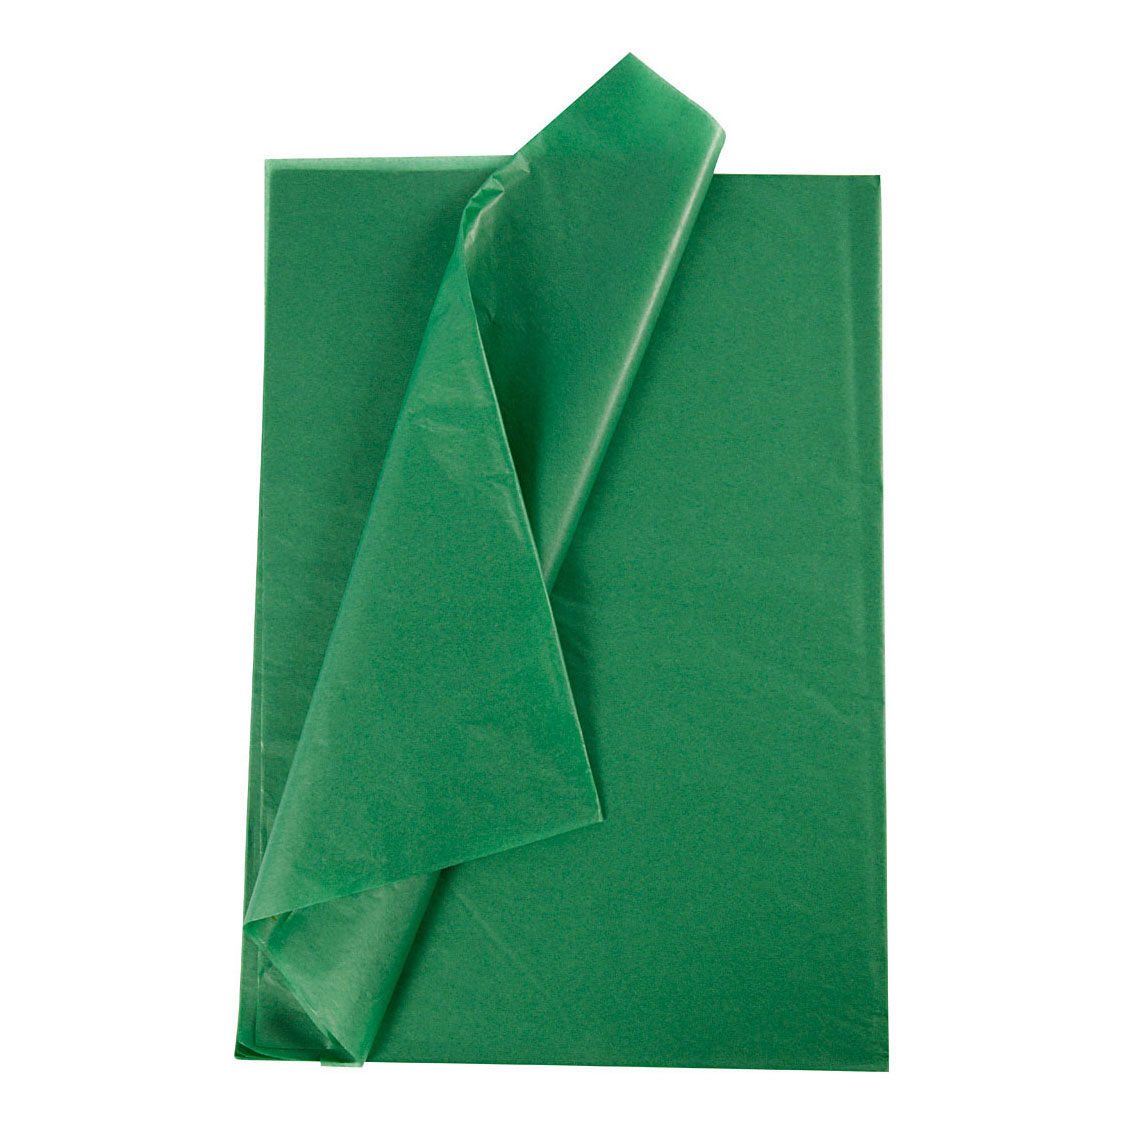 Papier de soie Vert 10 Feuilles 14 gr, 50x70cm